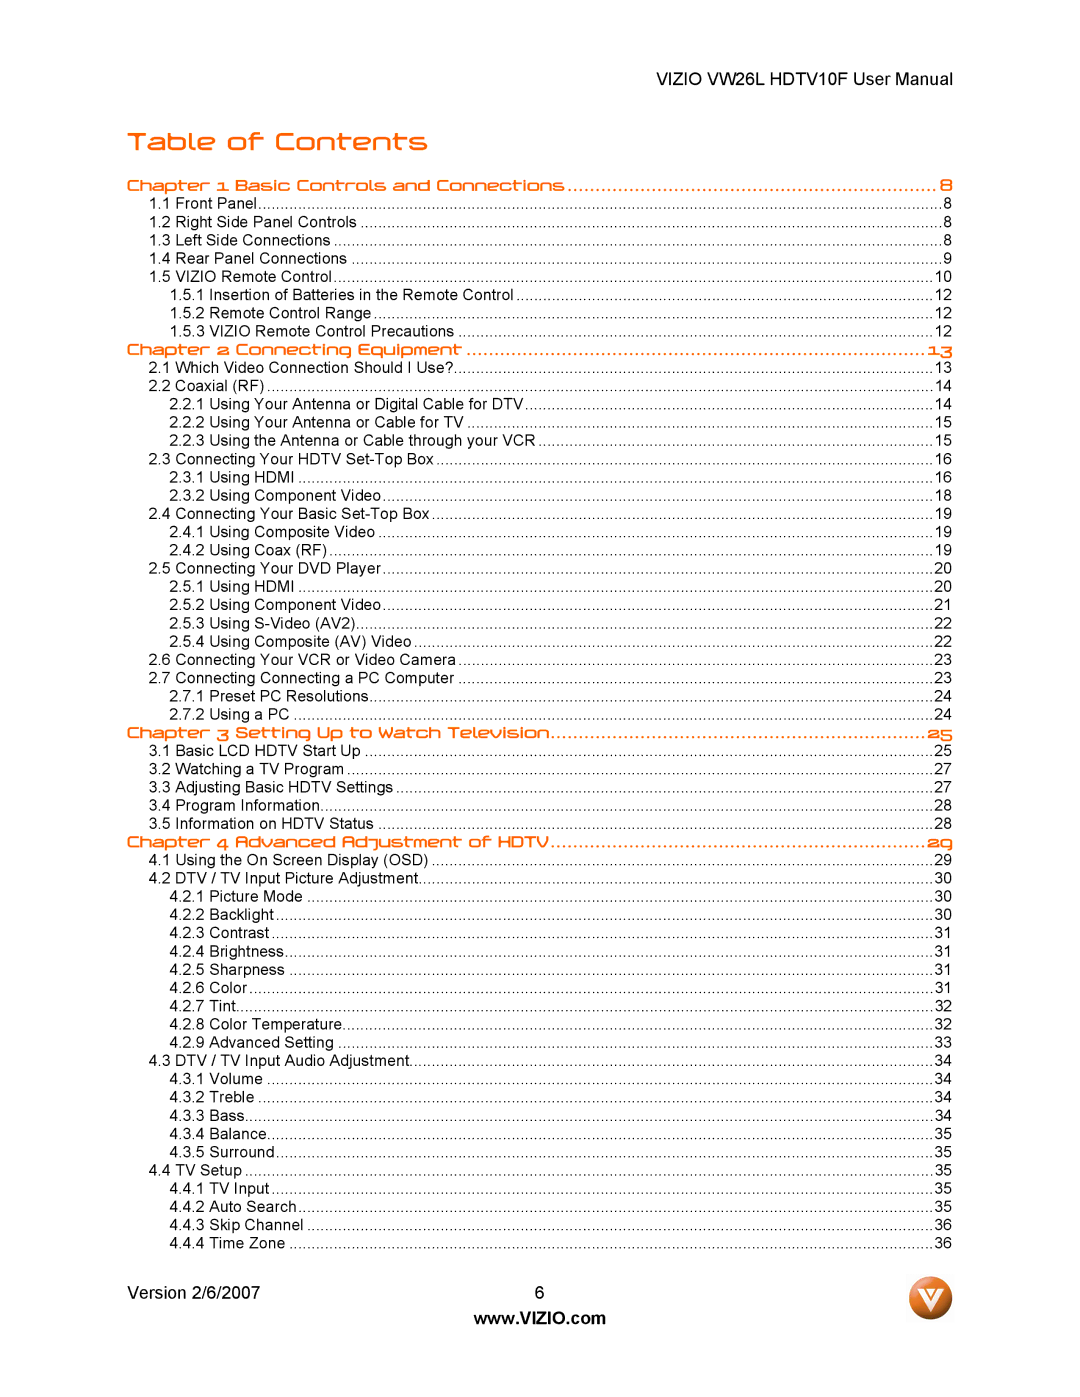 Vizio VW26L user manual Table of Contents 